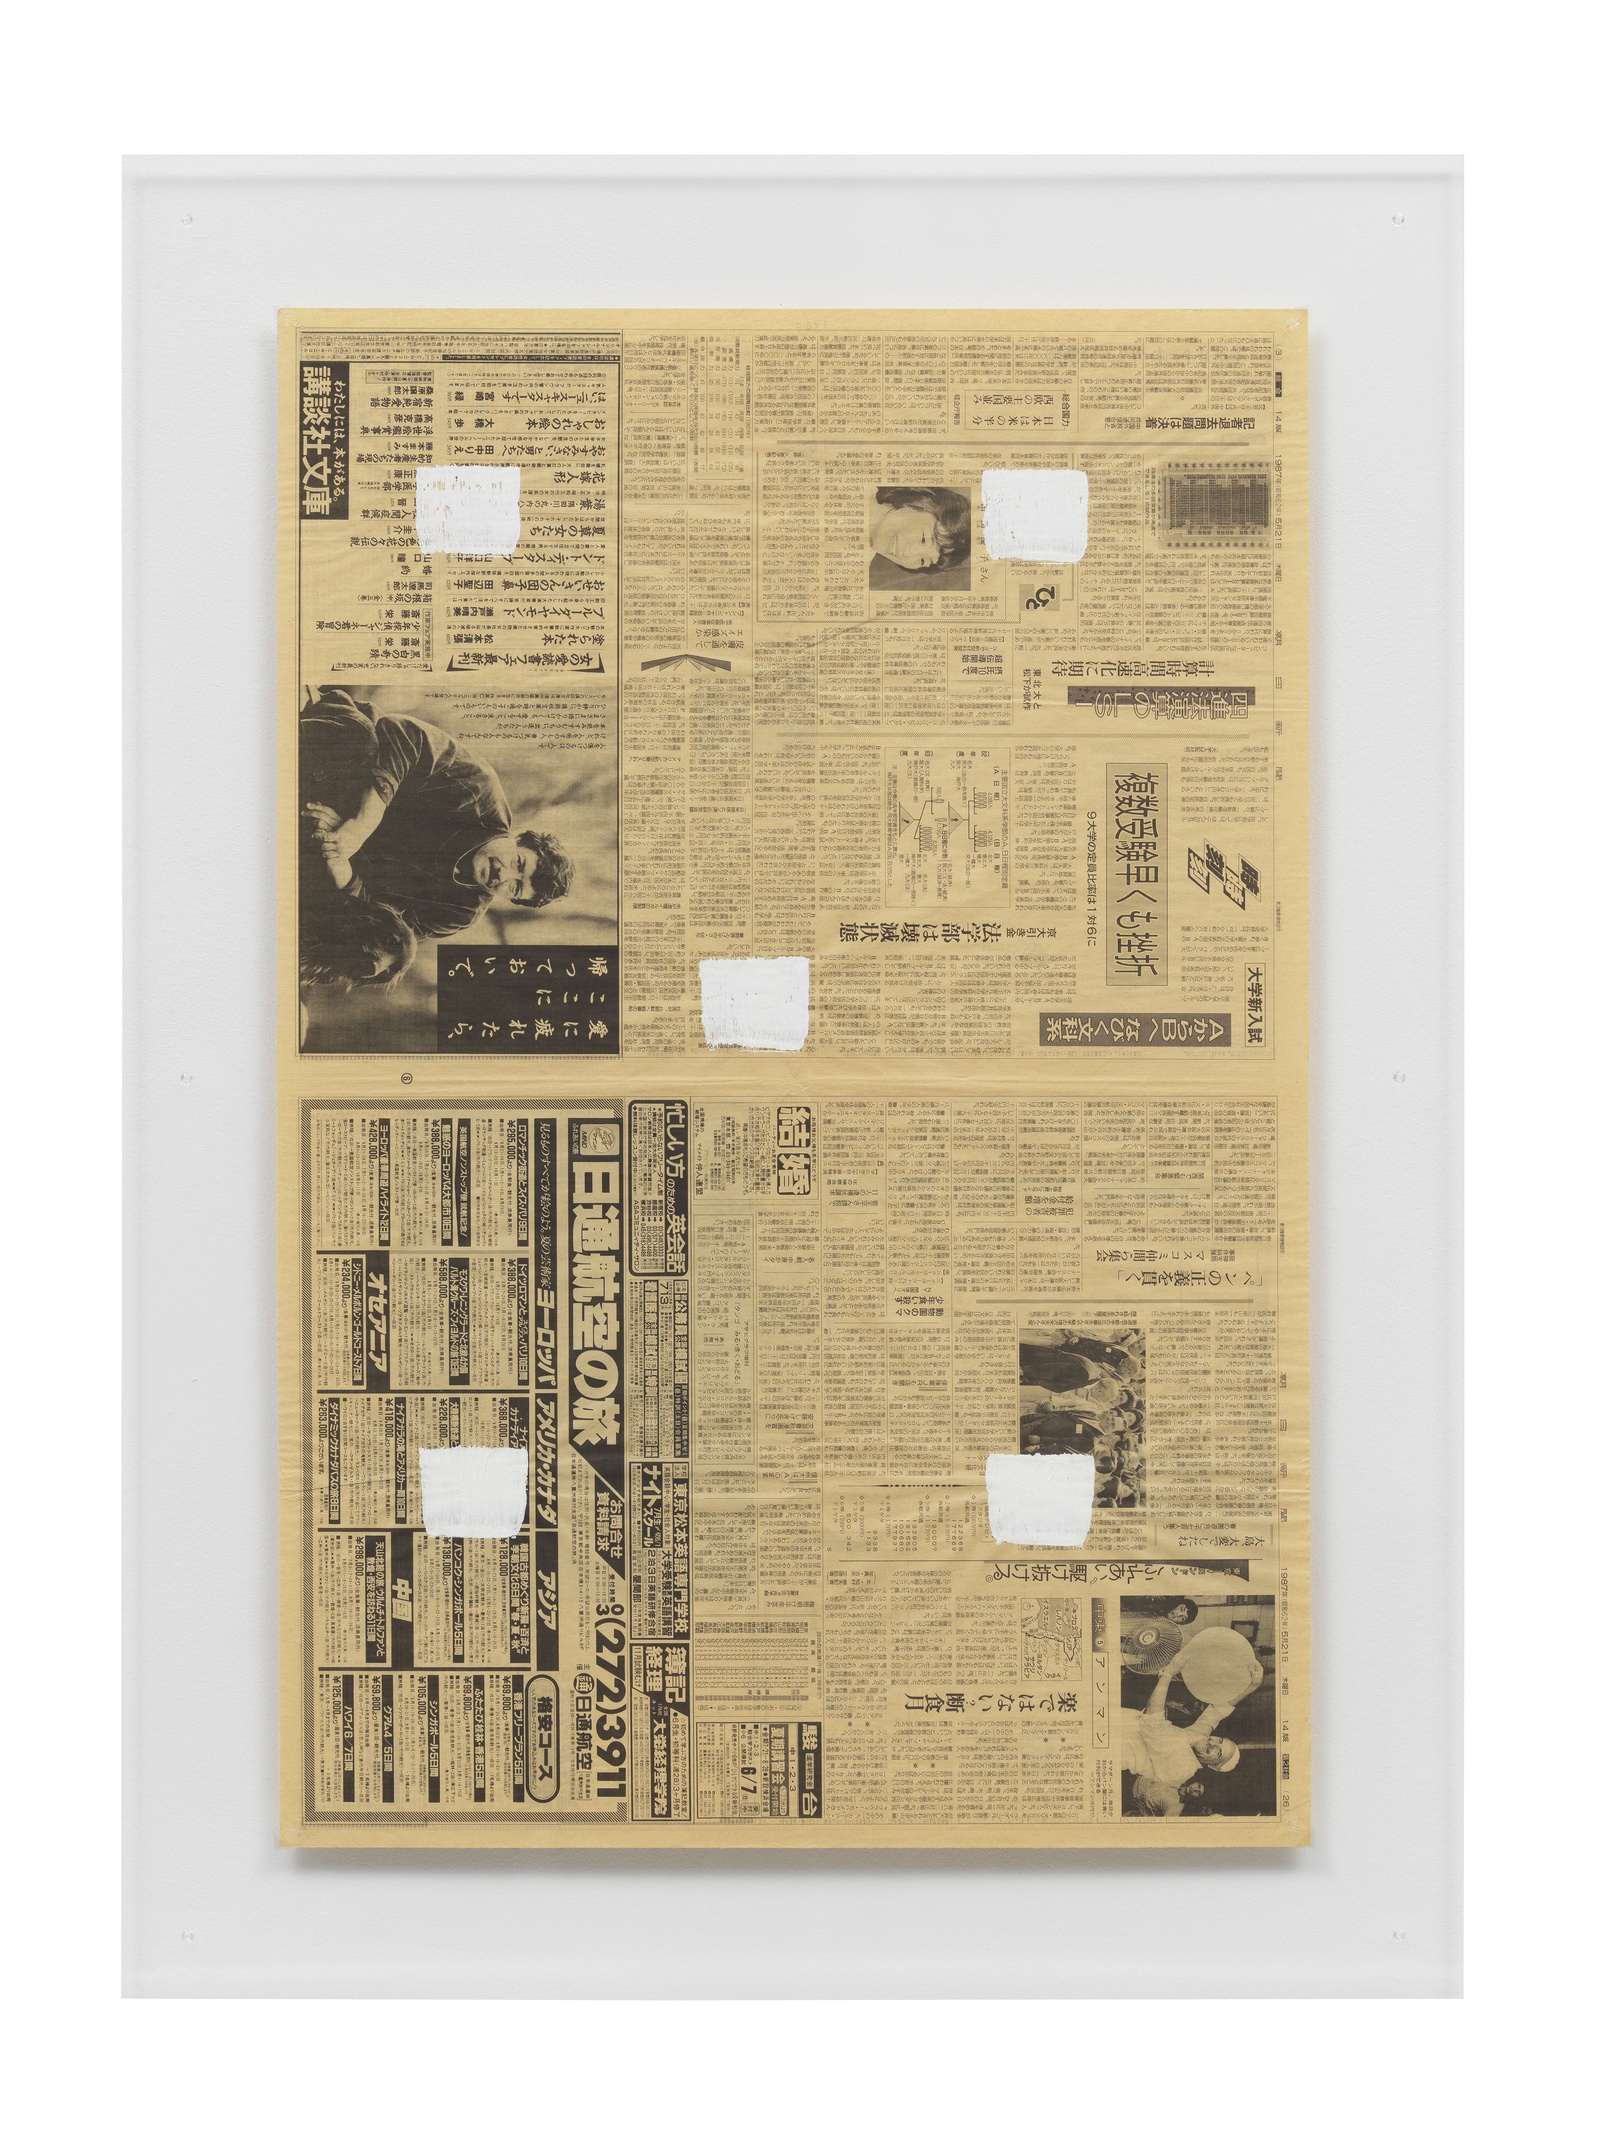 Niele ToroniImpronte di pennello n. 50 a intervallidi 30 cm, 1989White acrylic on newspaper83.5 x 57 cm